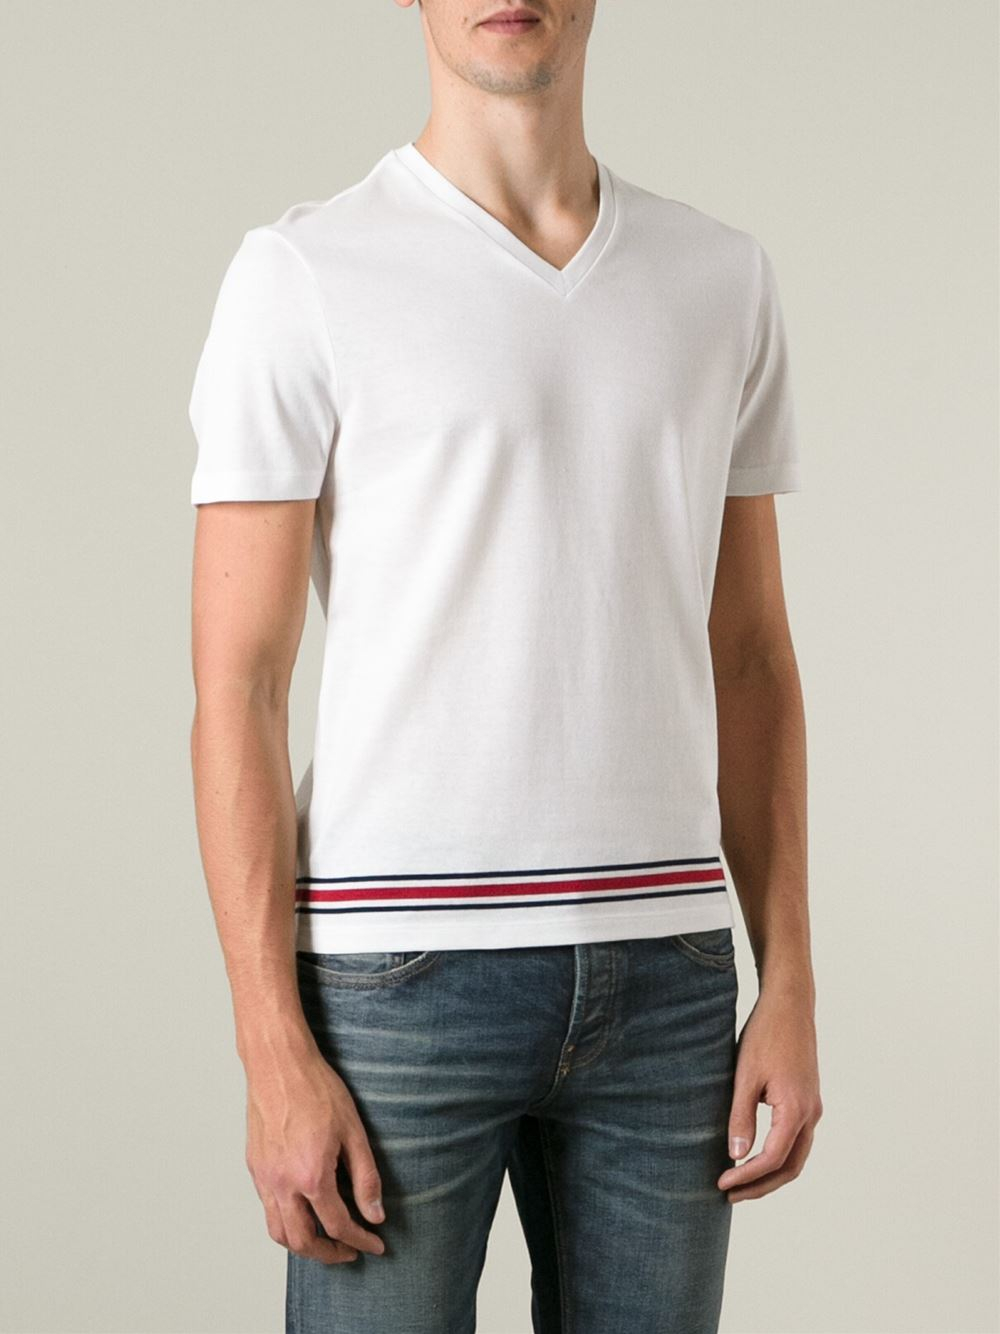 Lyst - Gucci V-Neck T-Shirt in White for Men